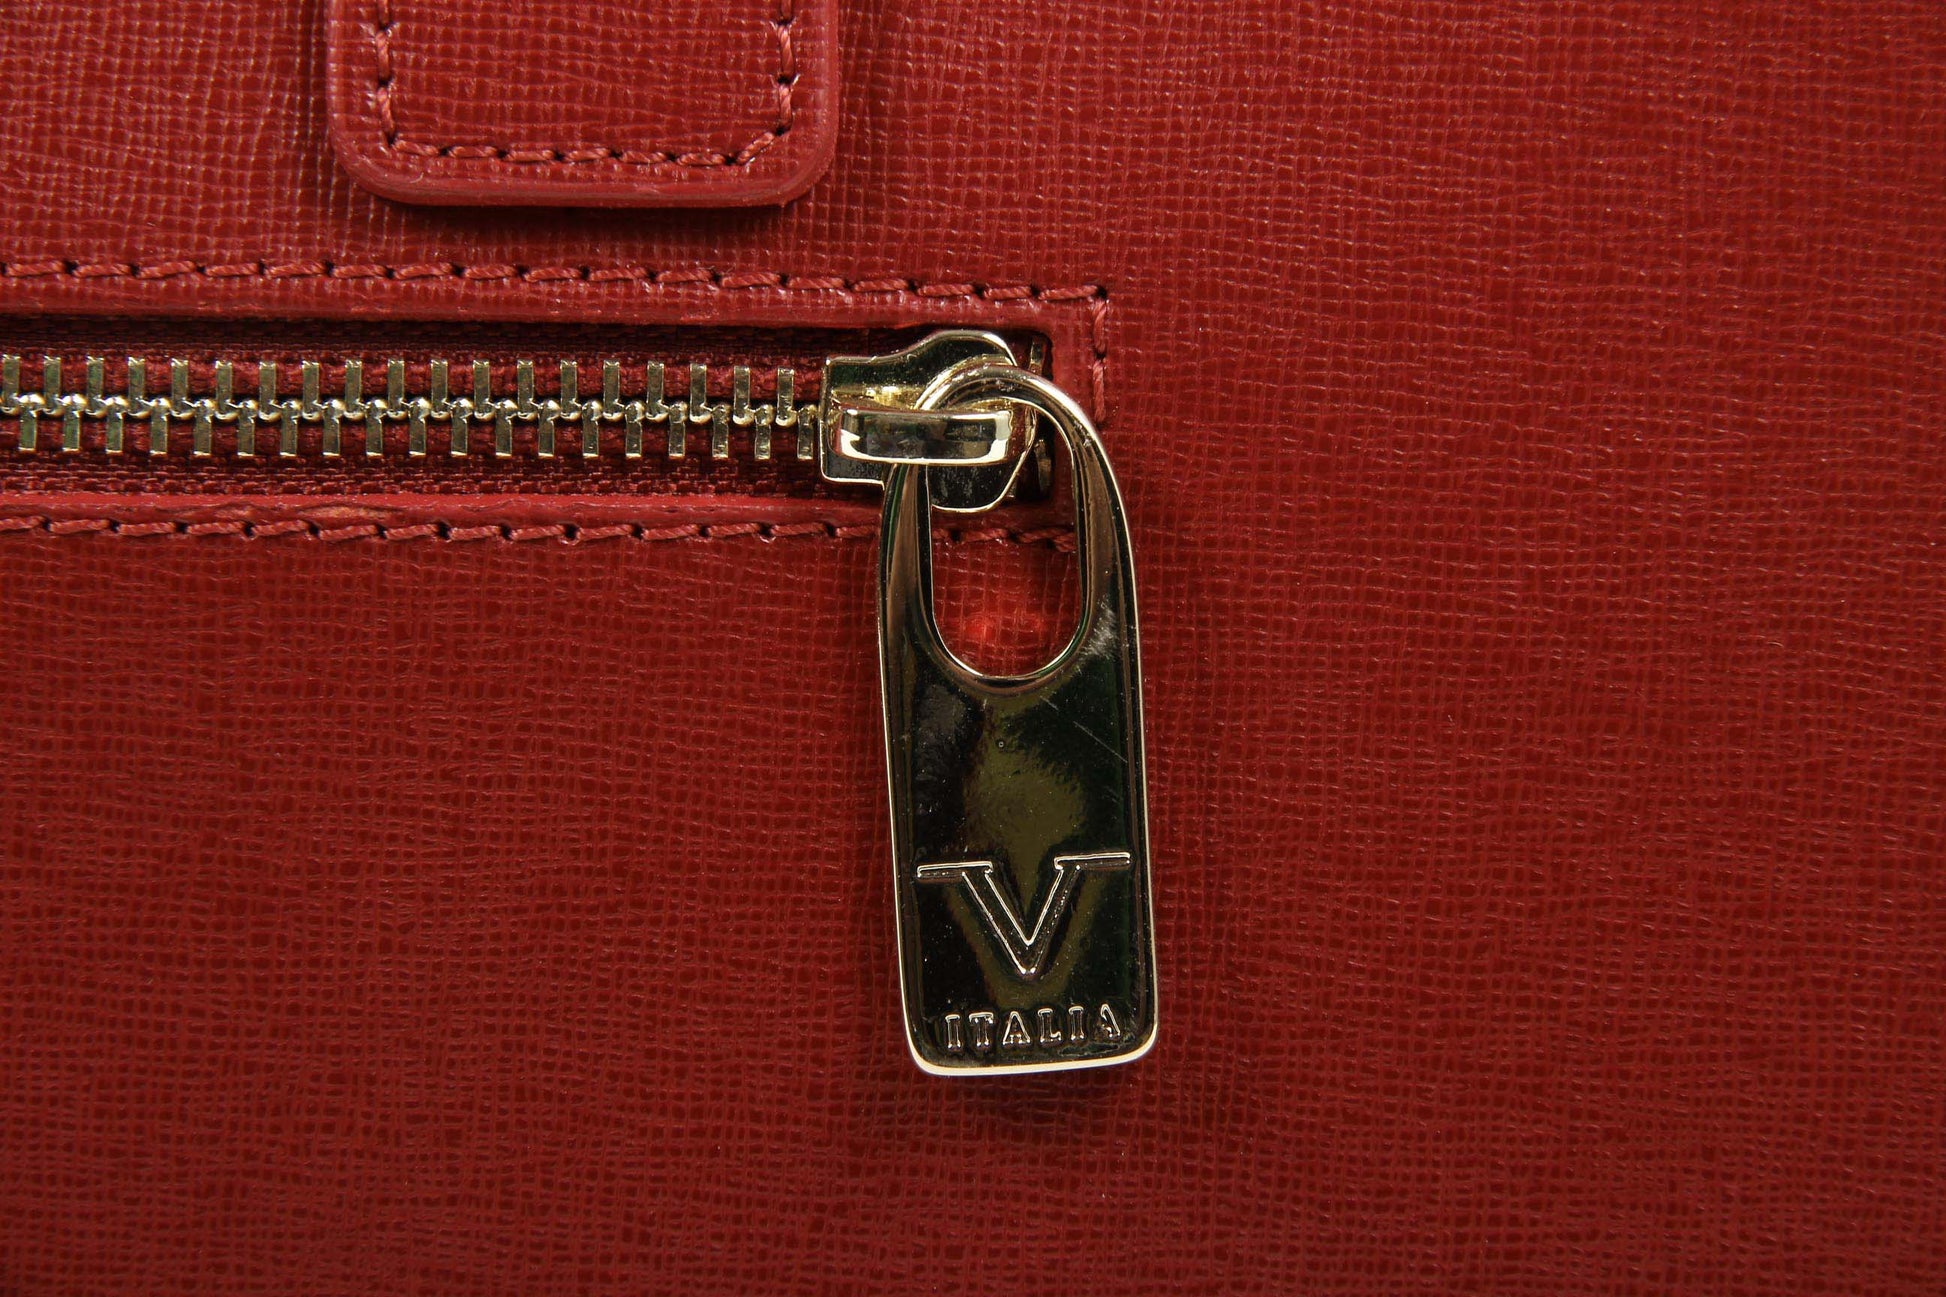 19V68 Italia, Bags, 9v69 Italia Red Handbag